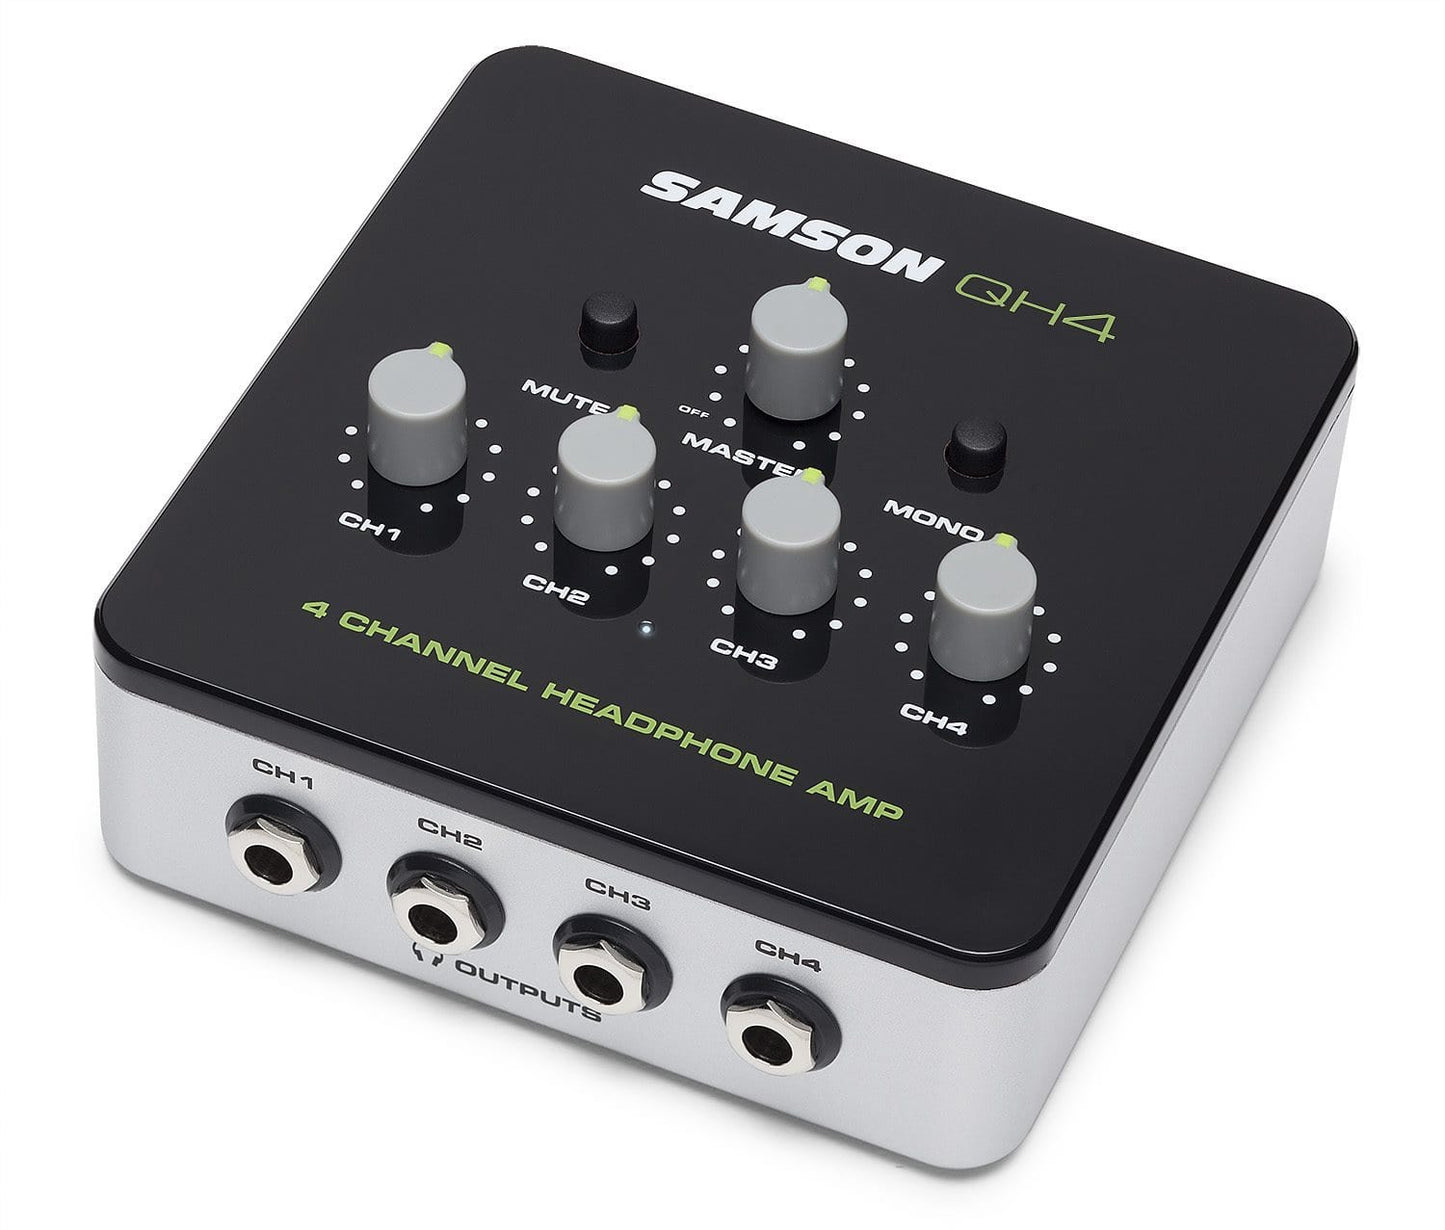 Samson QH4 4-Channel Headphone Amplifier - PSSL ProSound and Stage Lighting